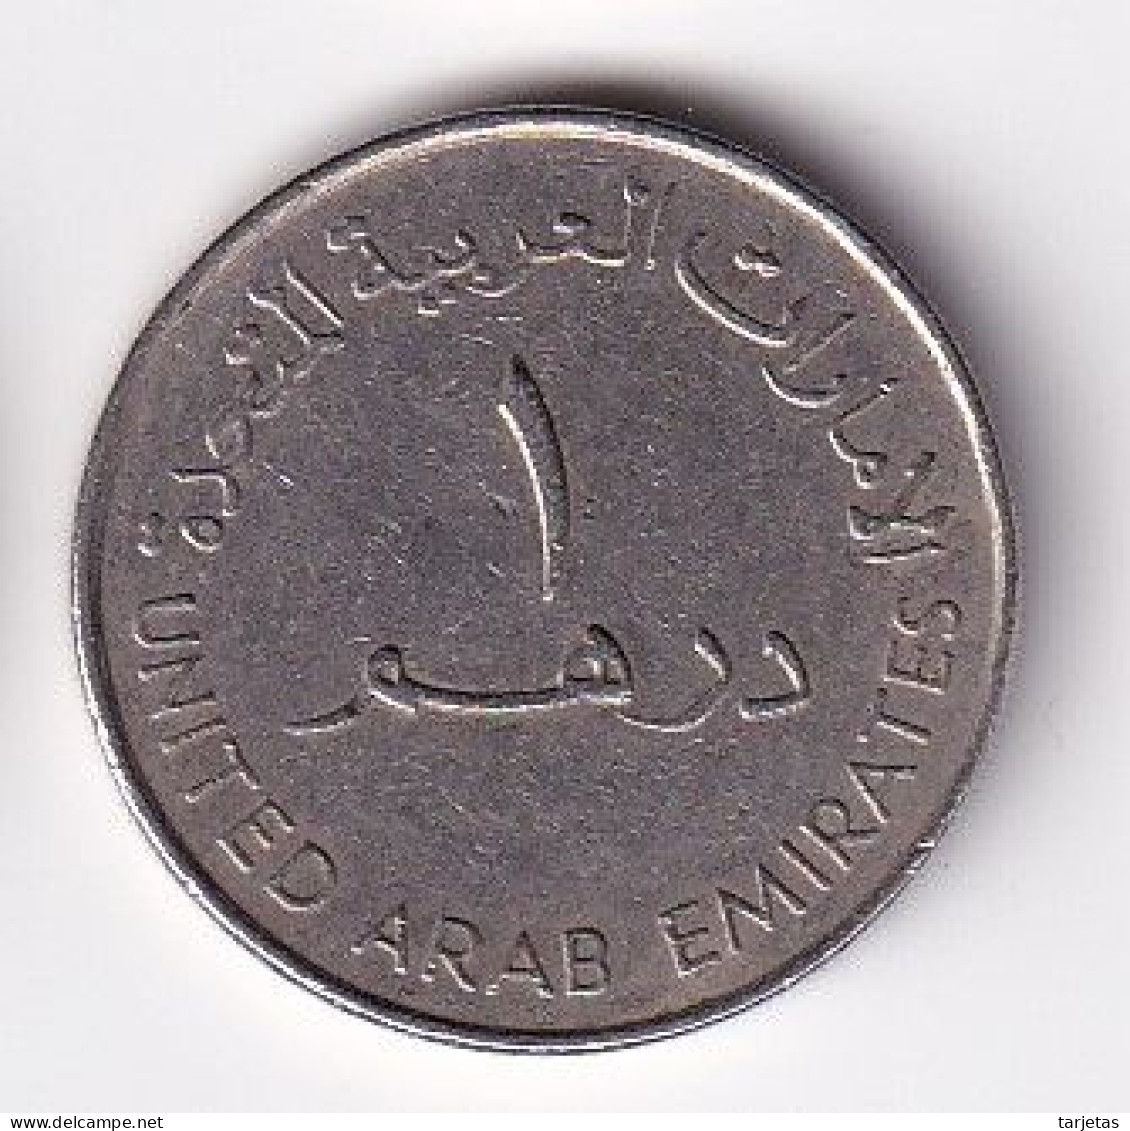 MONEDA DE EMIRATOS ARABES DE 1 DIRHAM DEL AÑO 1998 - 35 ANIV. BANK OF DUBAI (COIN) - Emirats Arabes Unis